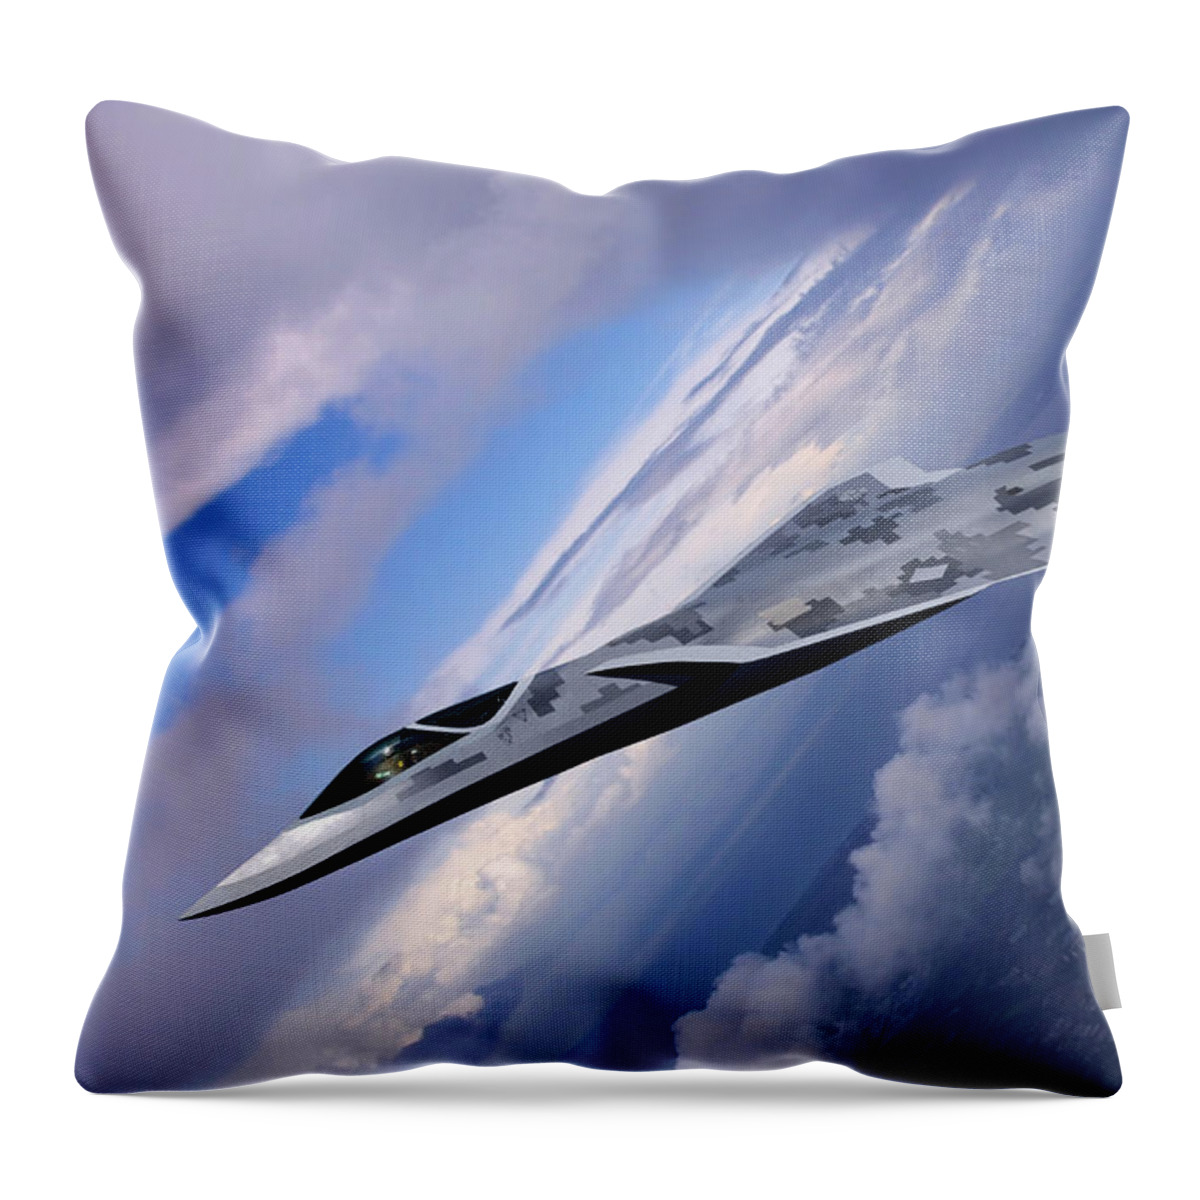 Lmt Throw Pillow featuring the digital art Lockheed LMT Raven II Vertical Climb by Custom Aviation Art